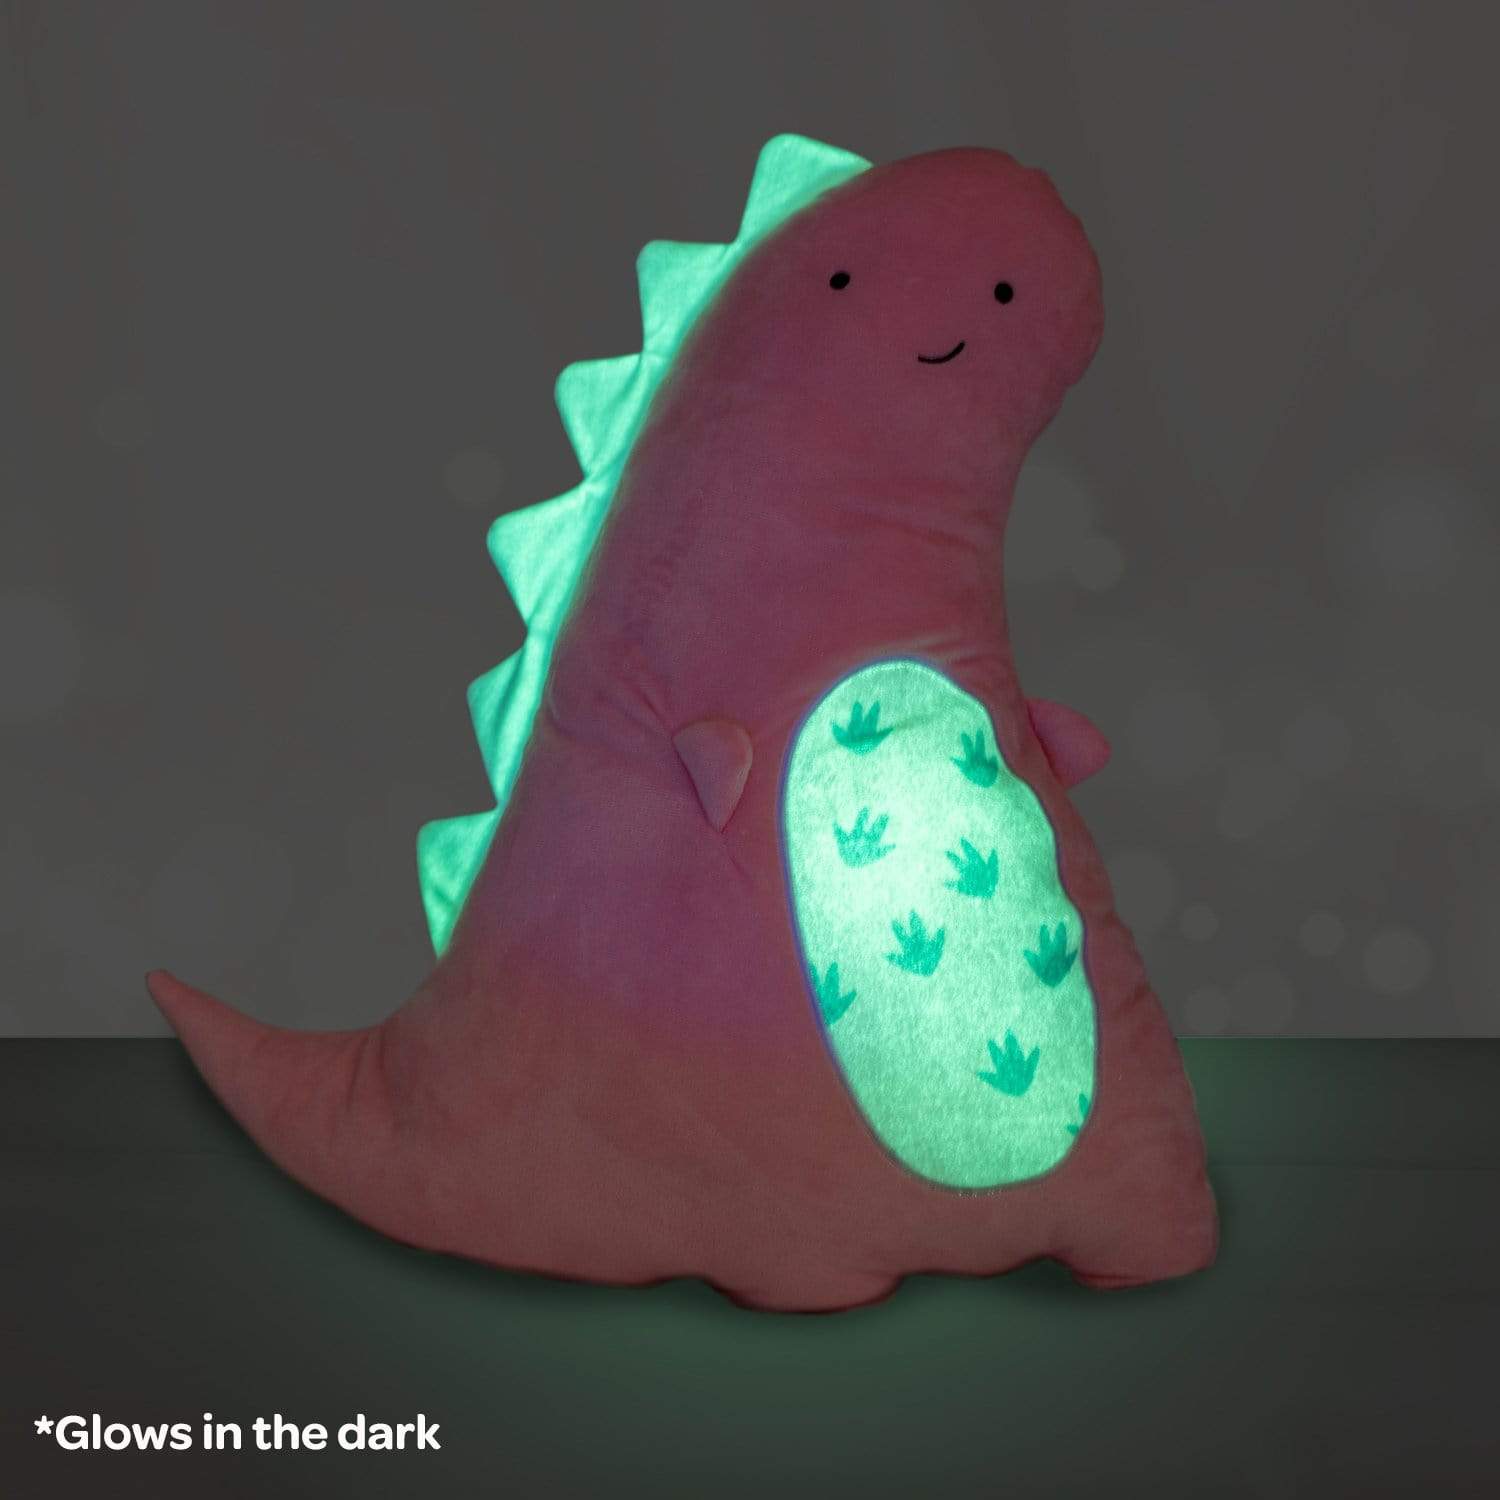 Adora Glow in the Dark Pillow - Dino Stuffed Animal Design